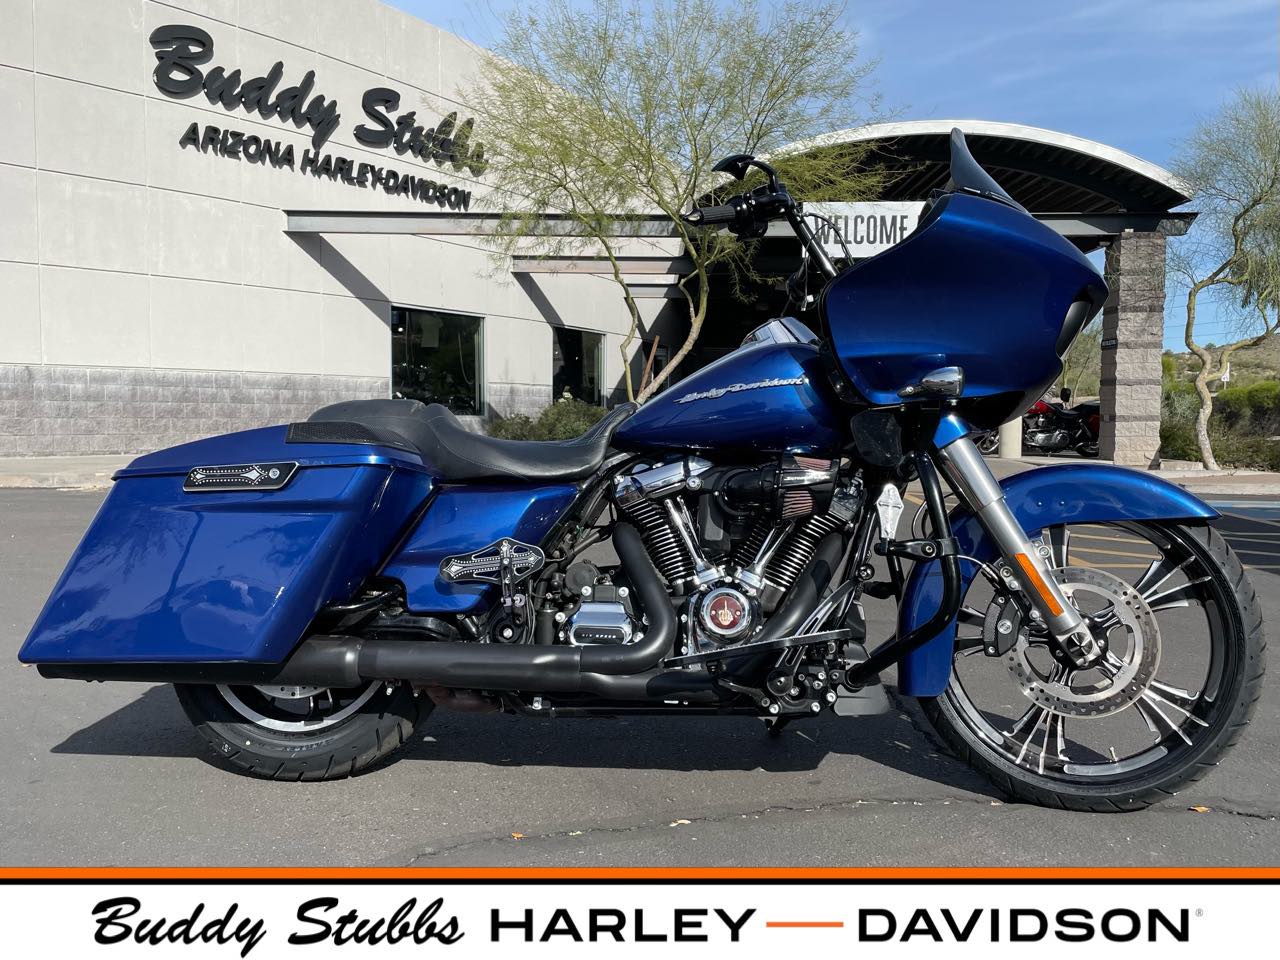 2017 Harley-Davidson Road Glide Special at Buddy Stubbs Arizona Harley-Davidson